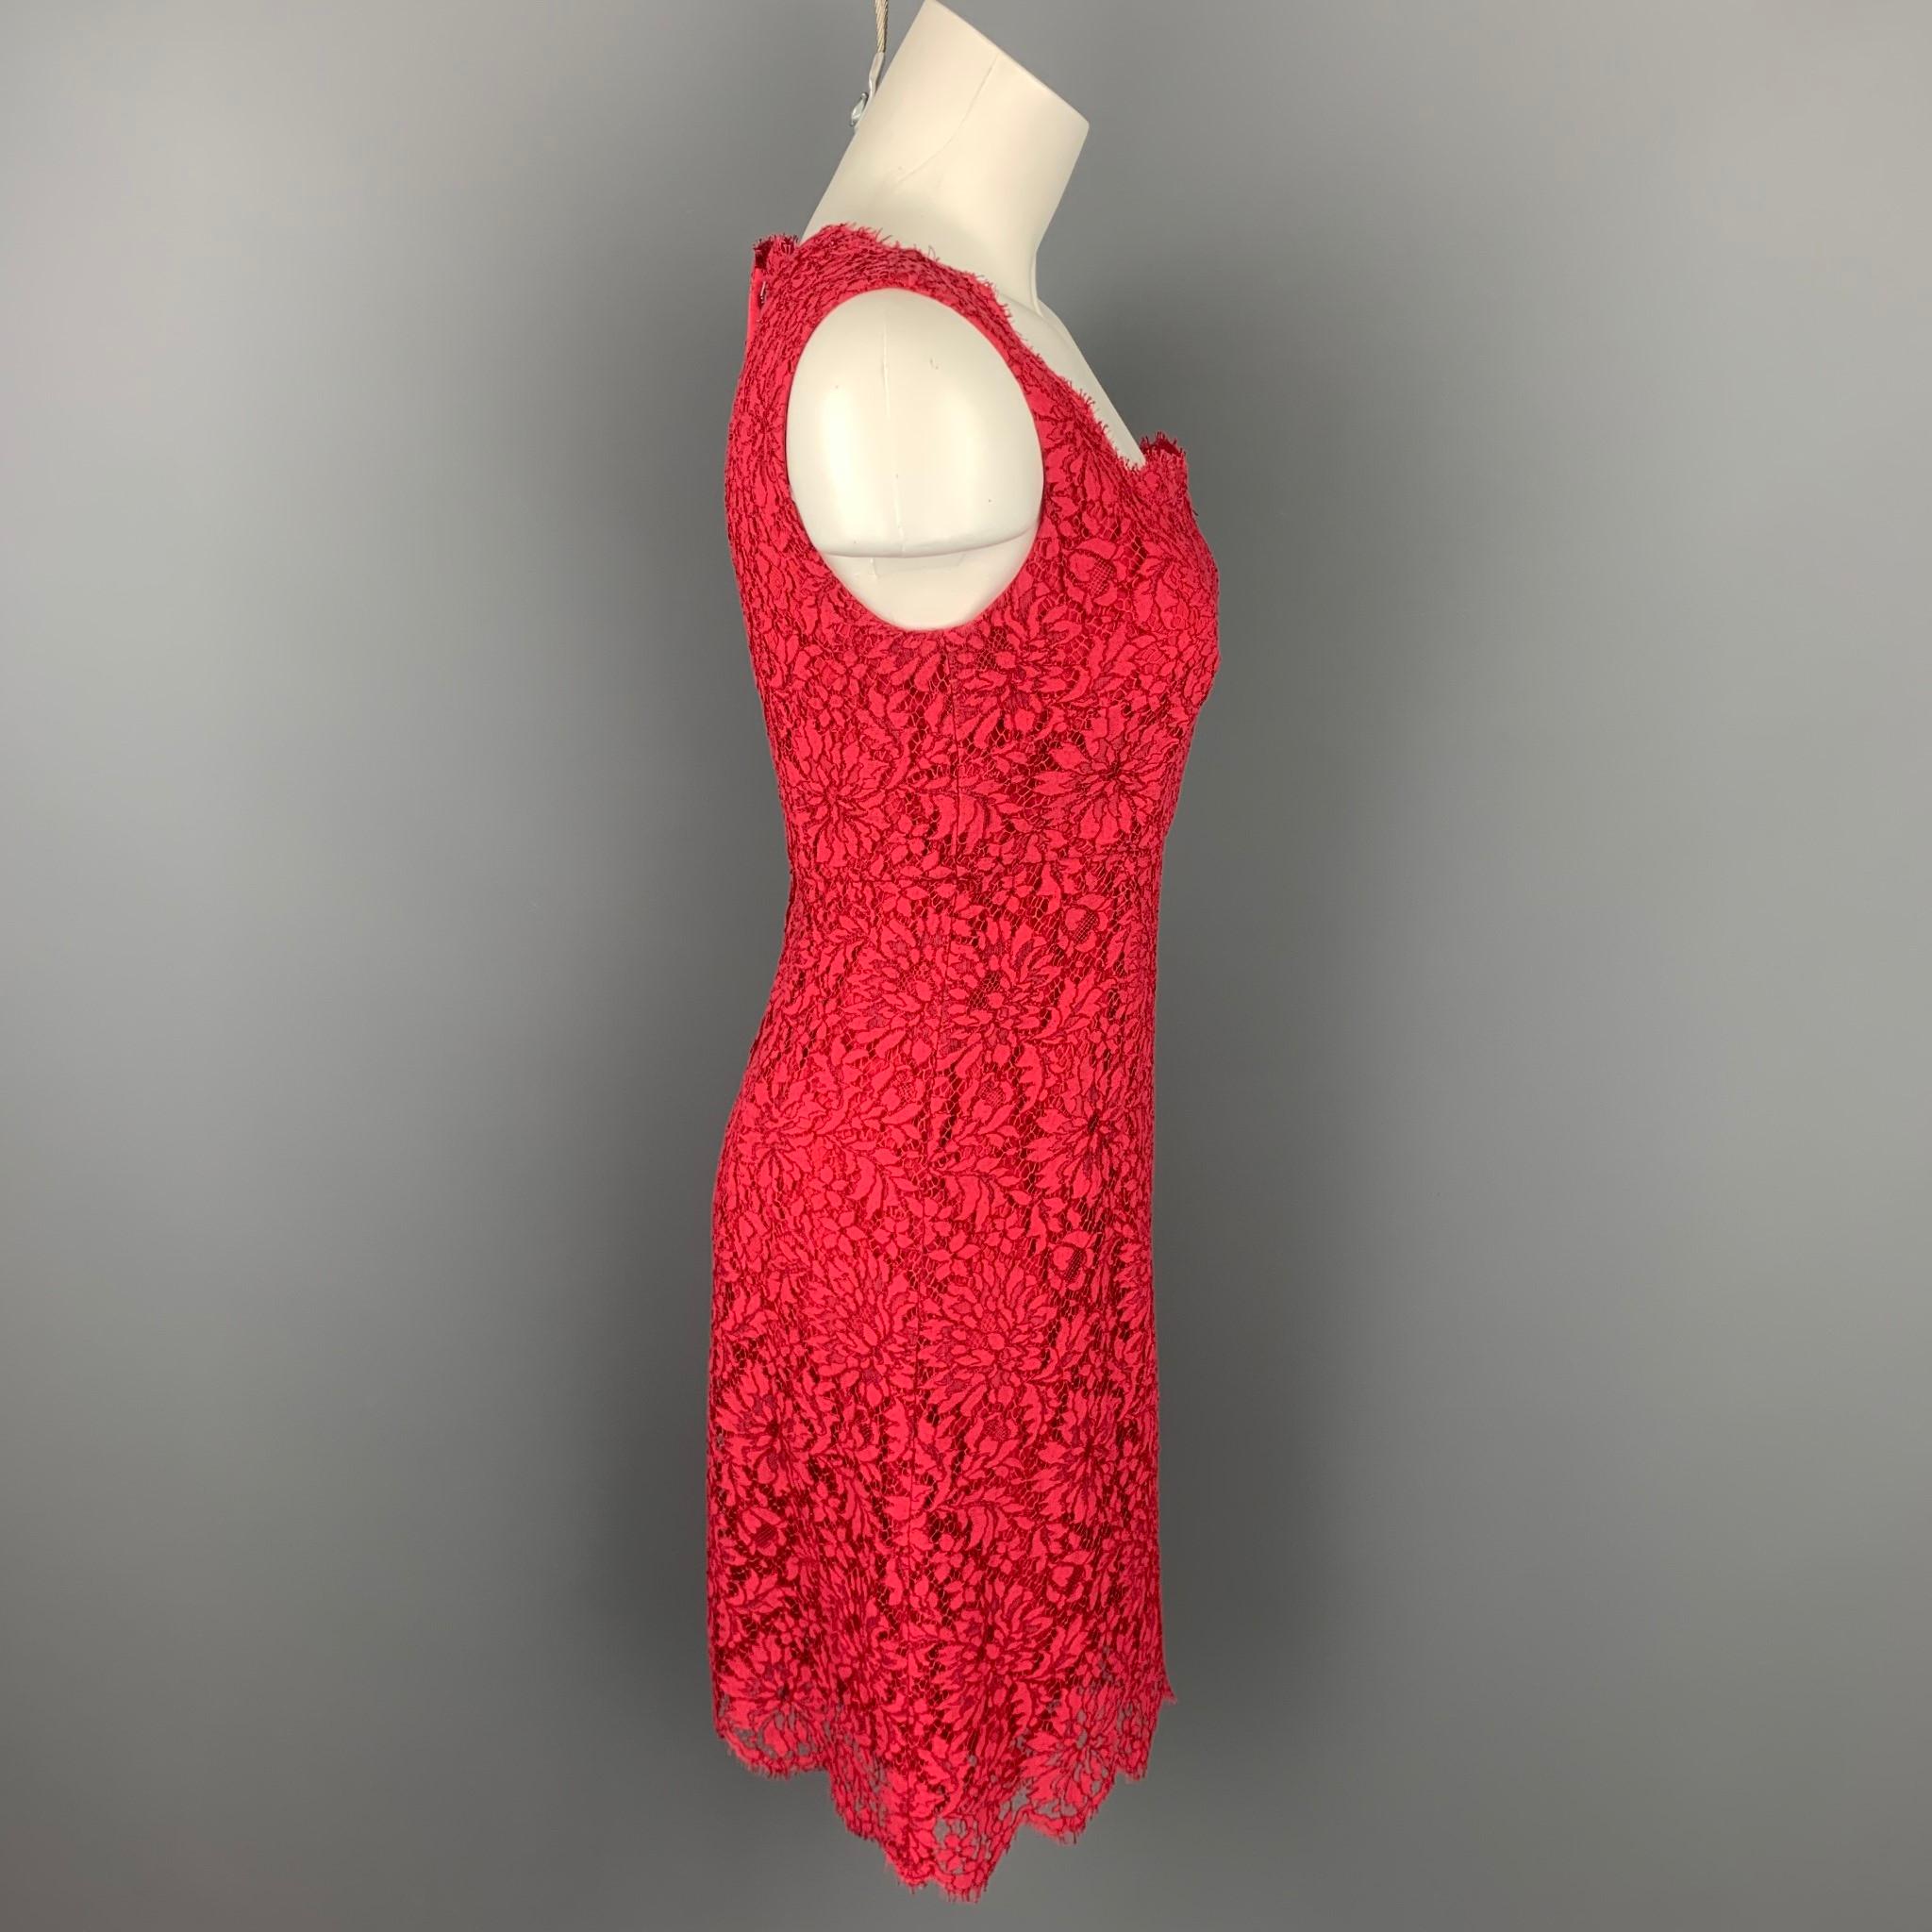 venus red lace dress